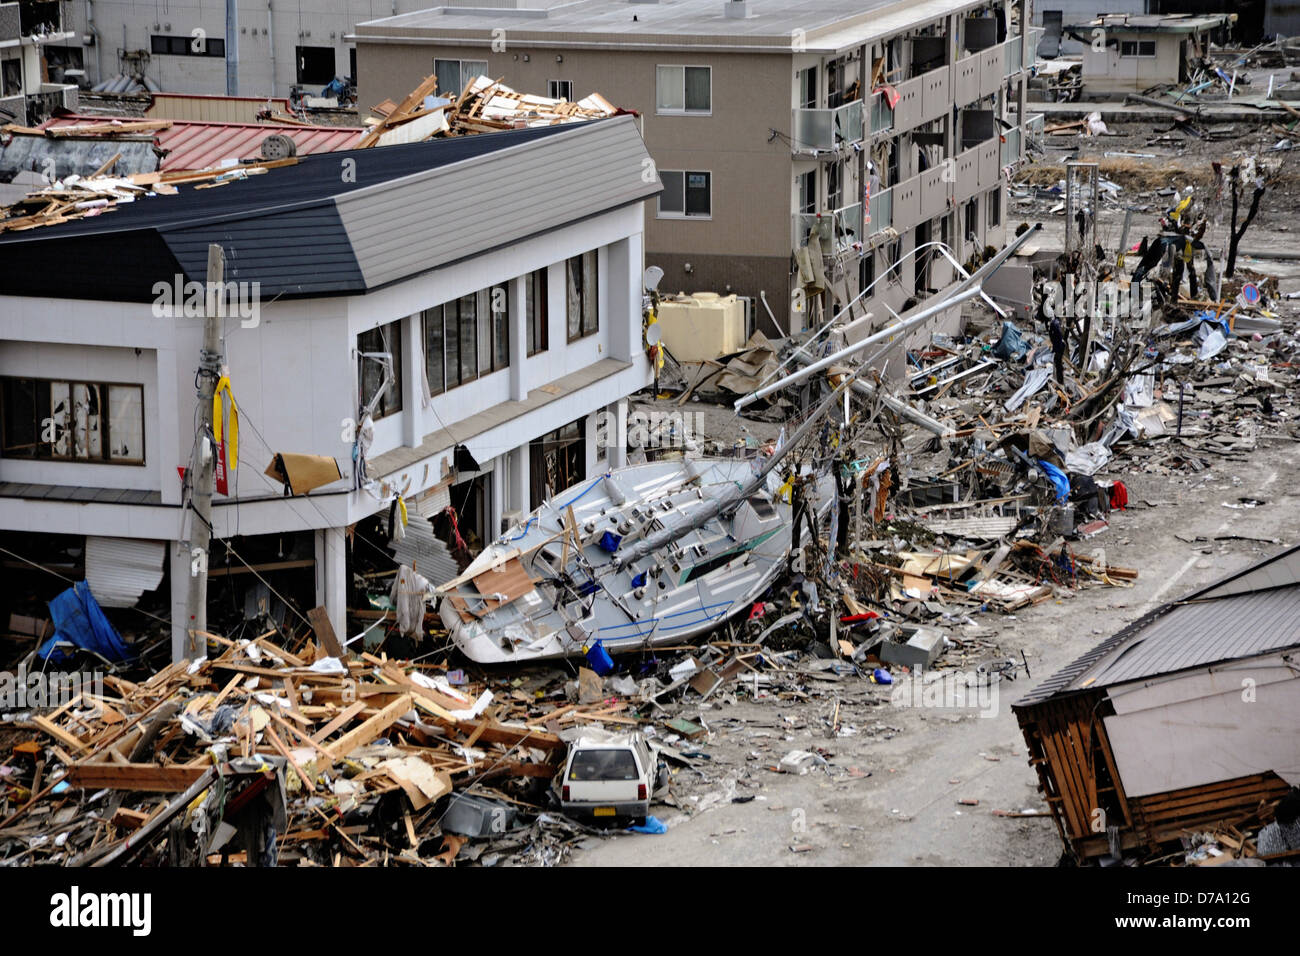 Sailboat Among Debris Following Earthquake Tsunami Stock Photo